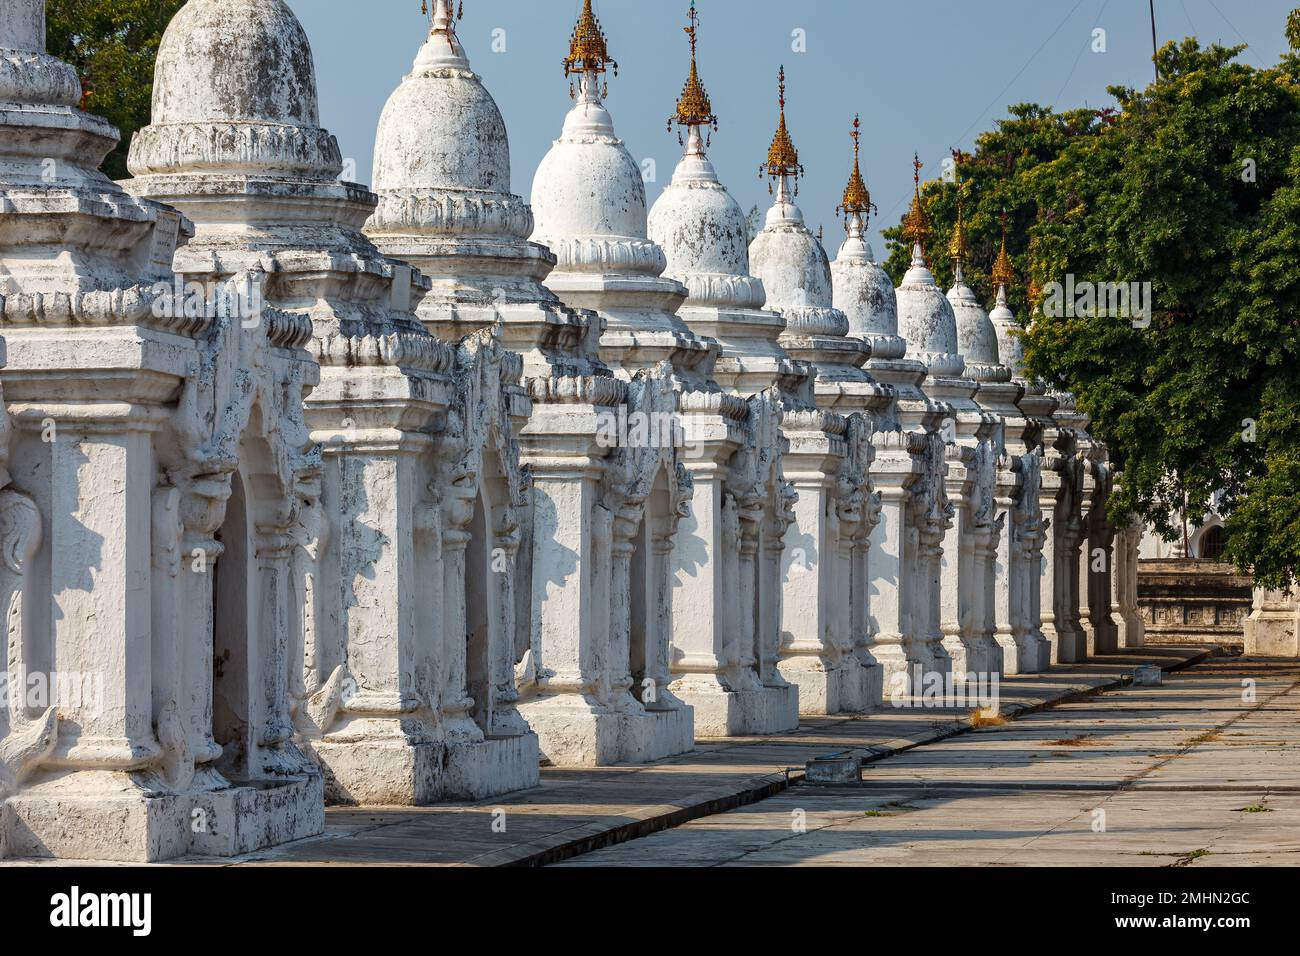 Pagoda and Stupa of Mandalay in Myanmar Stock Photo